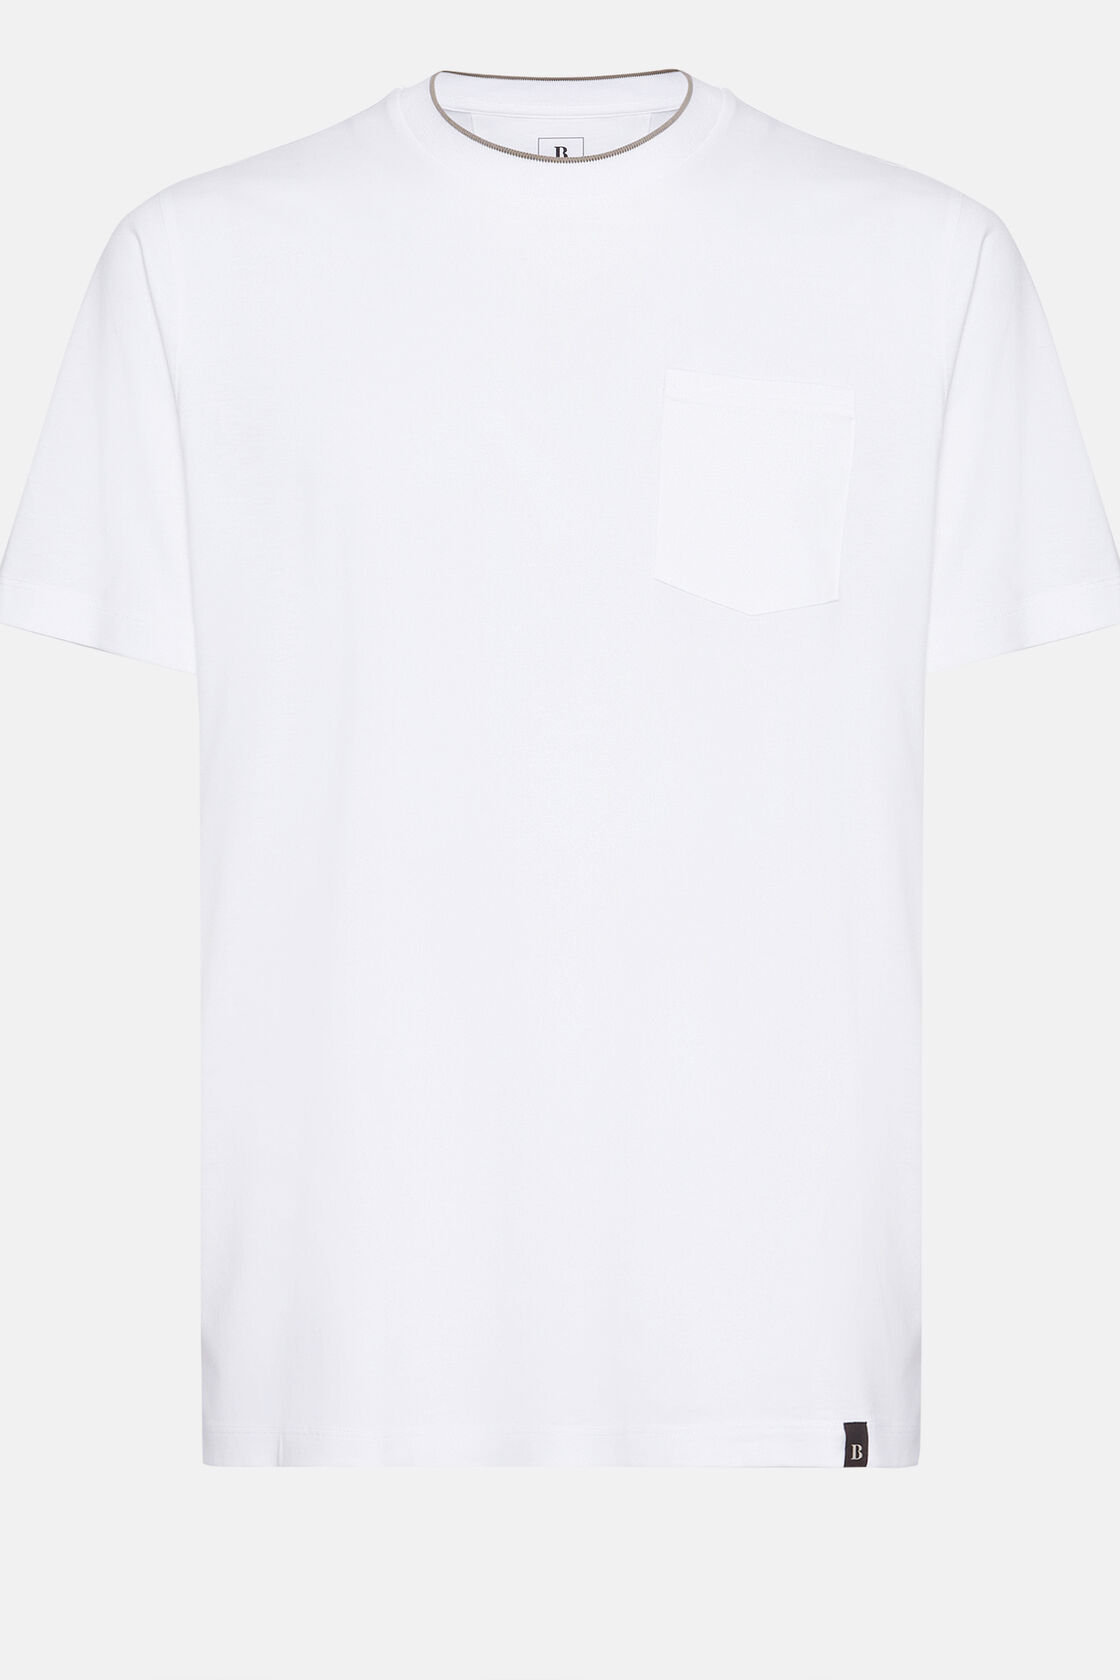 T-Shirt aus Baumwoll-Tencel-Jersey, Weiß, hi-res